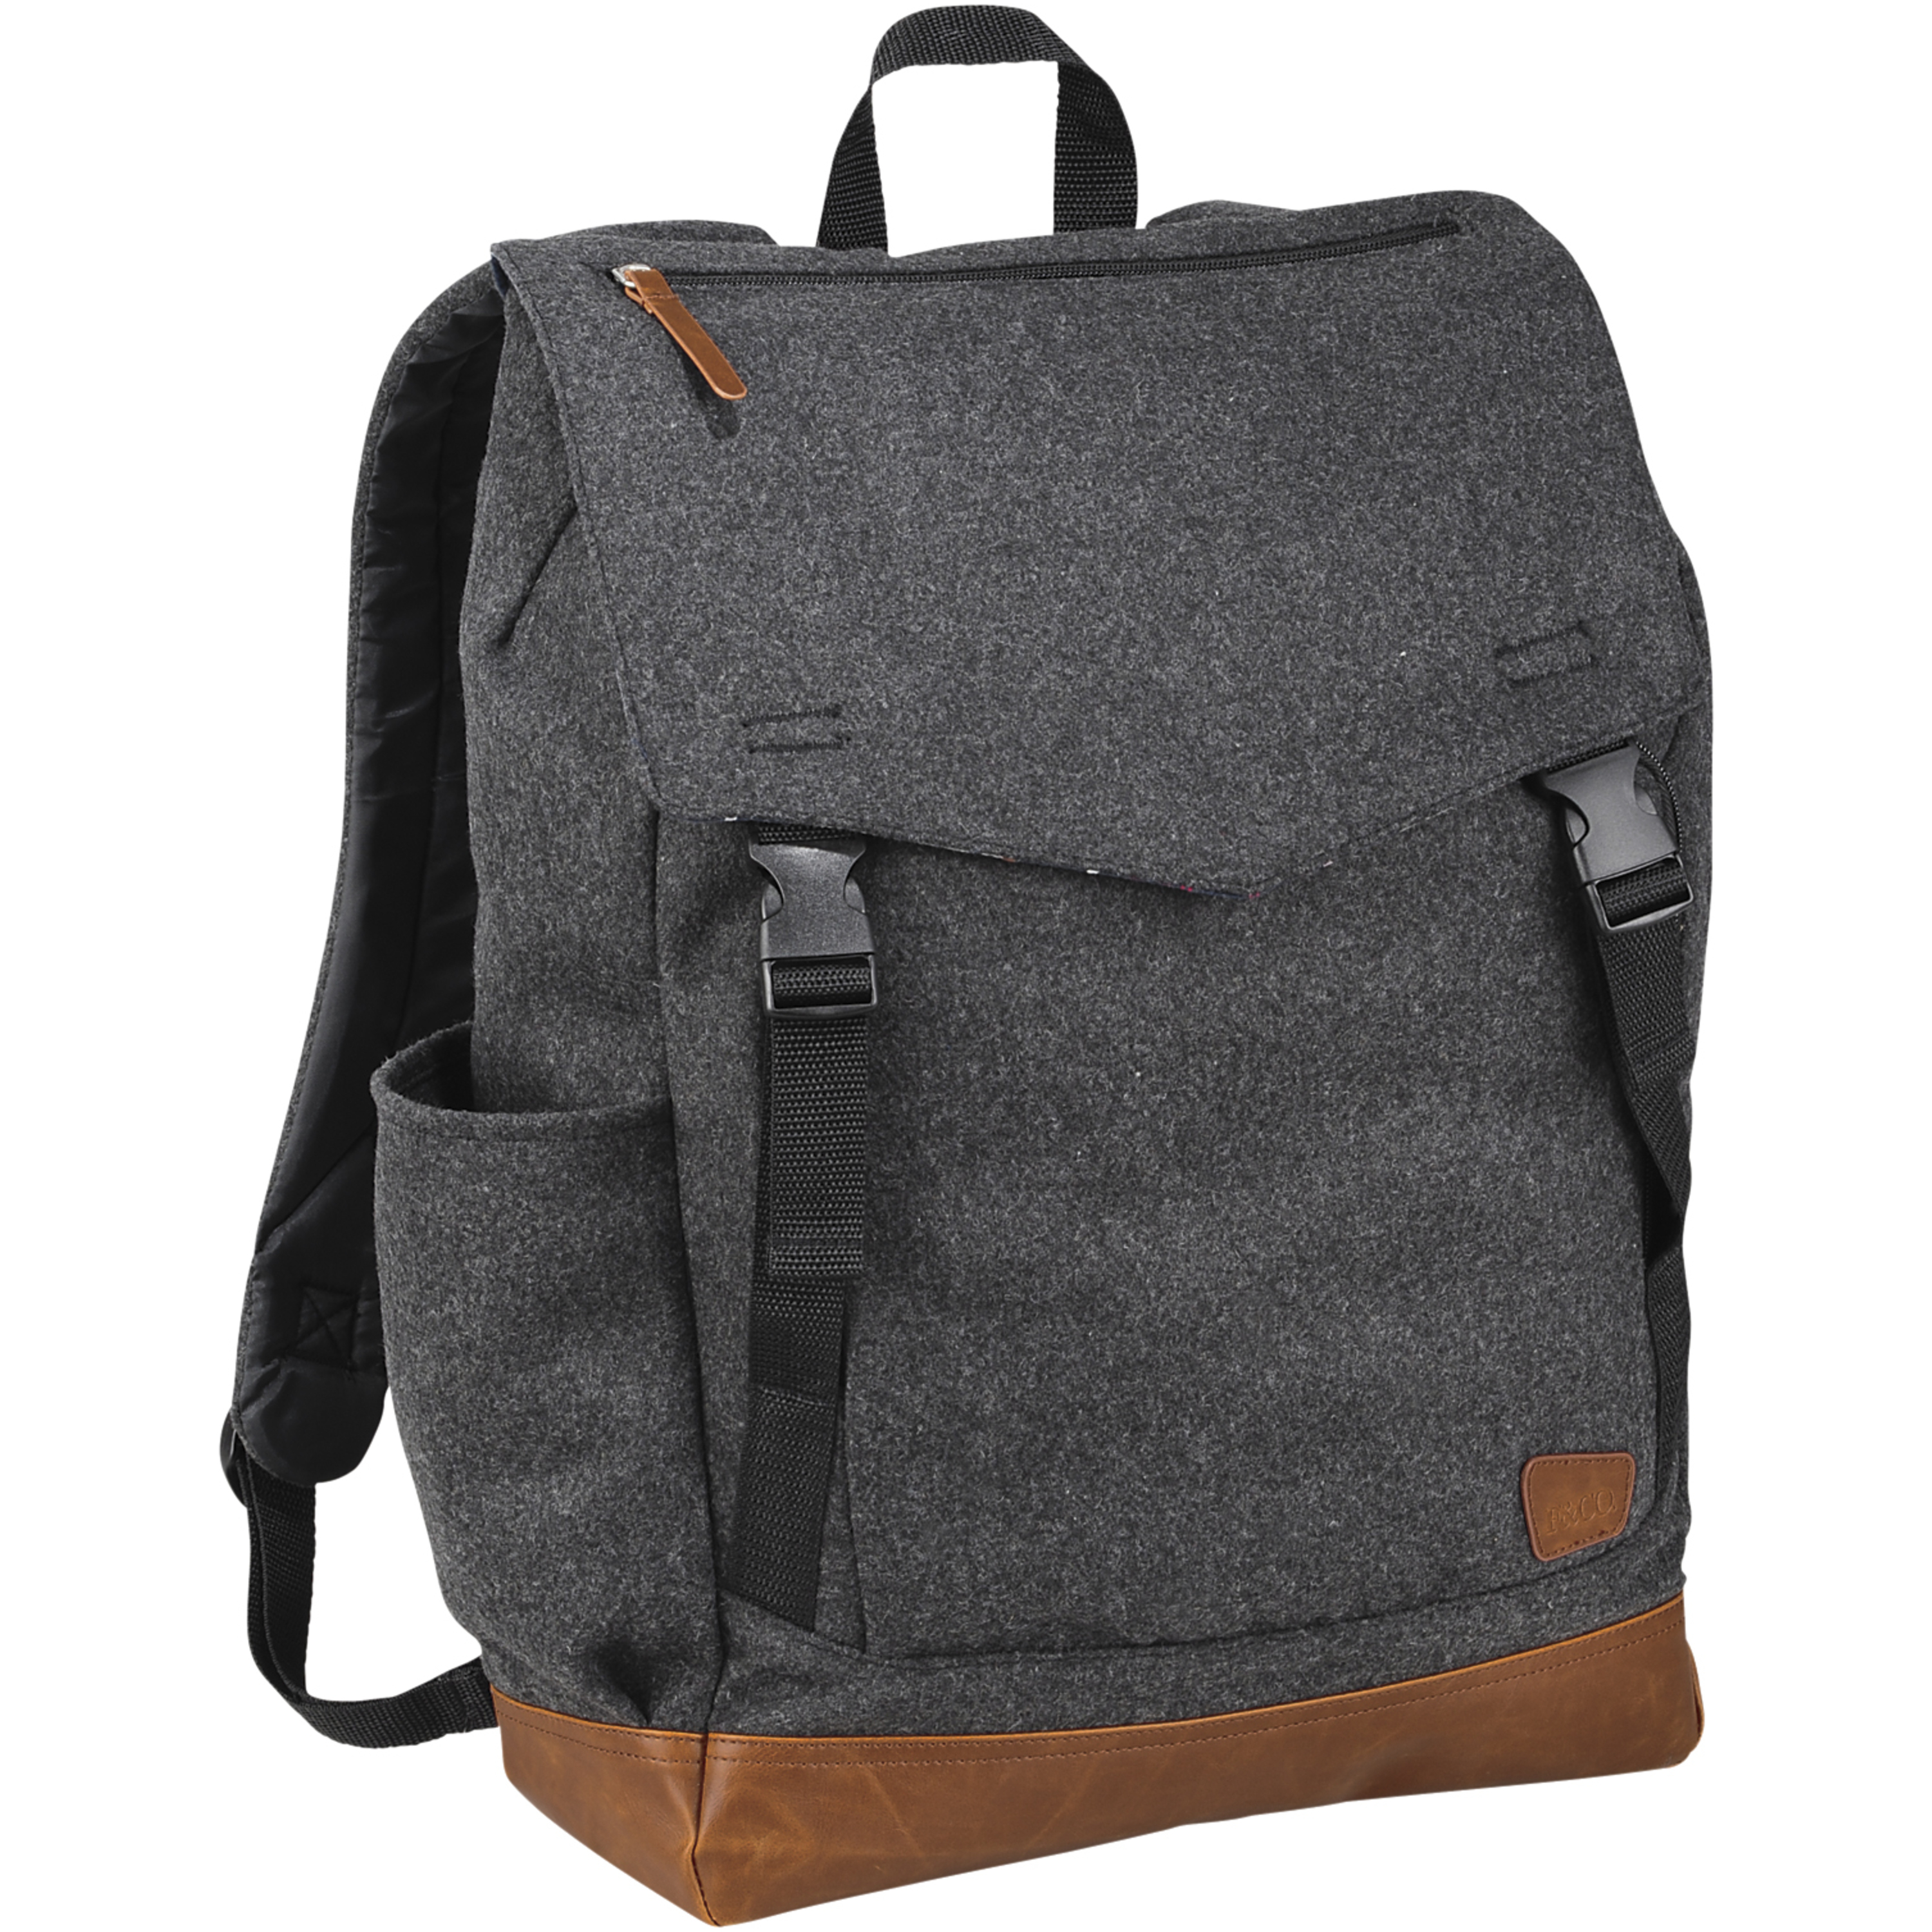 Campster 15" laptop backpack 15L